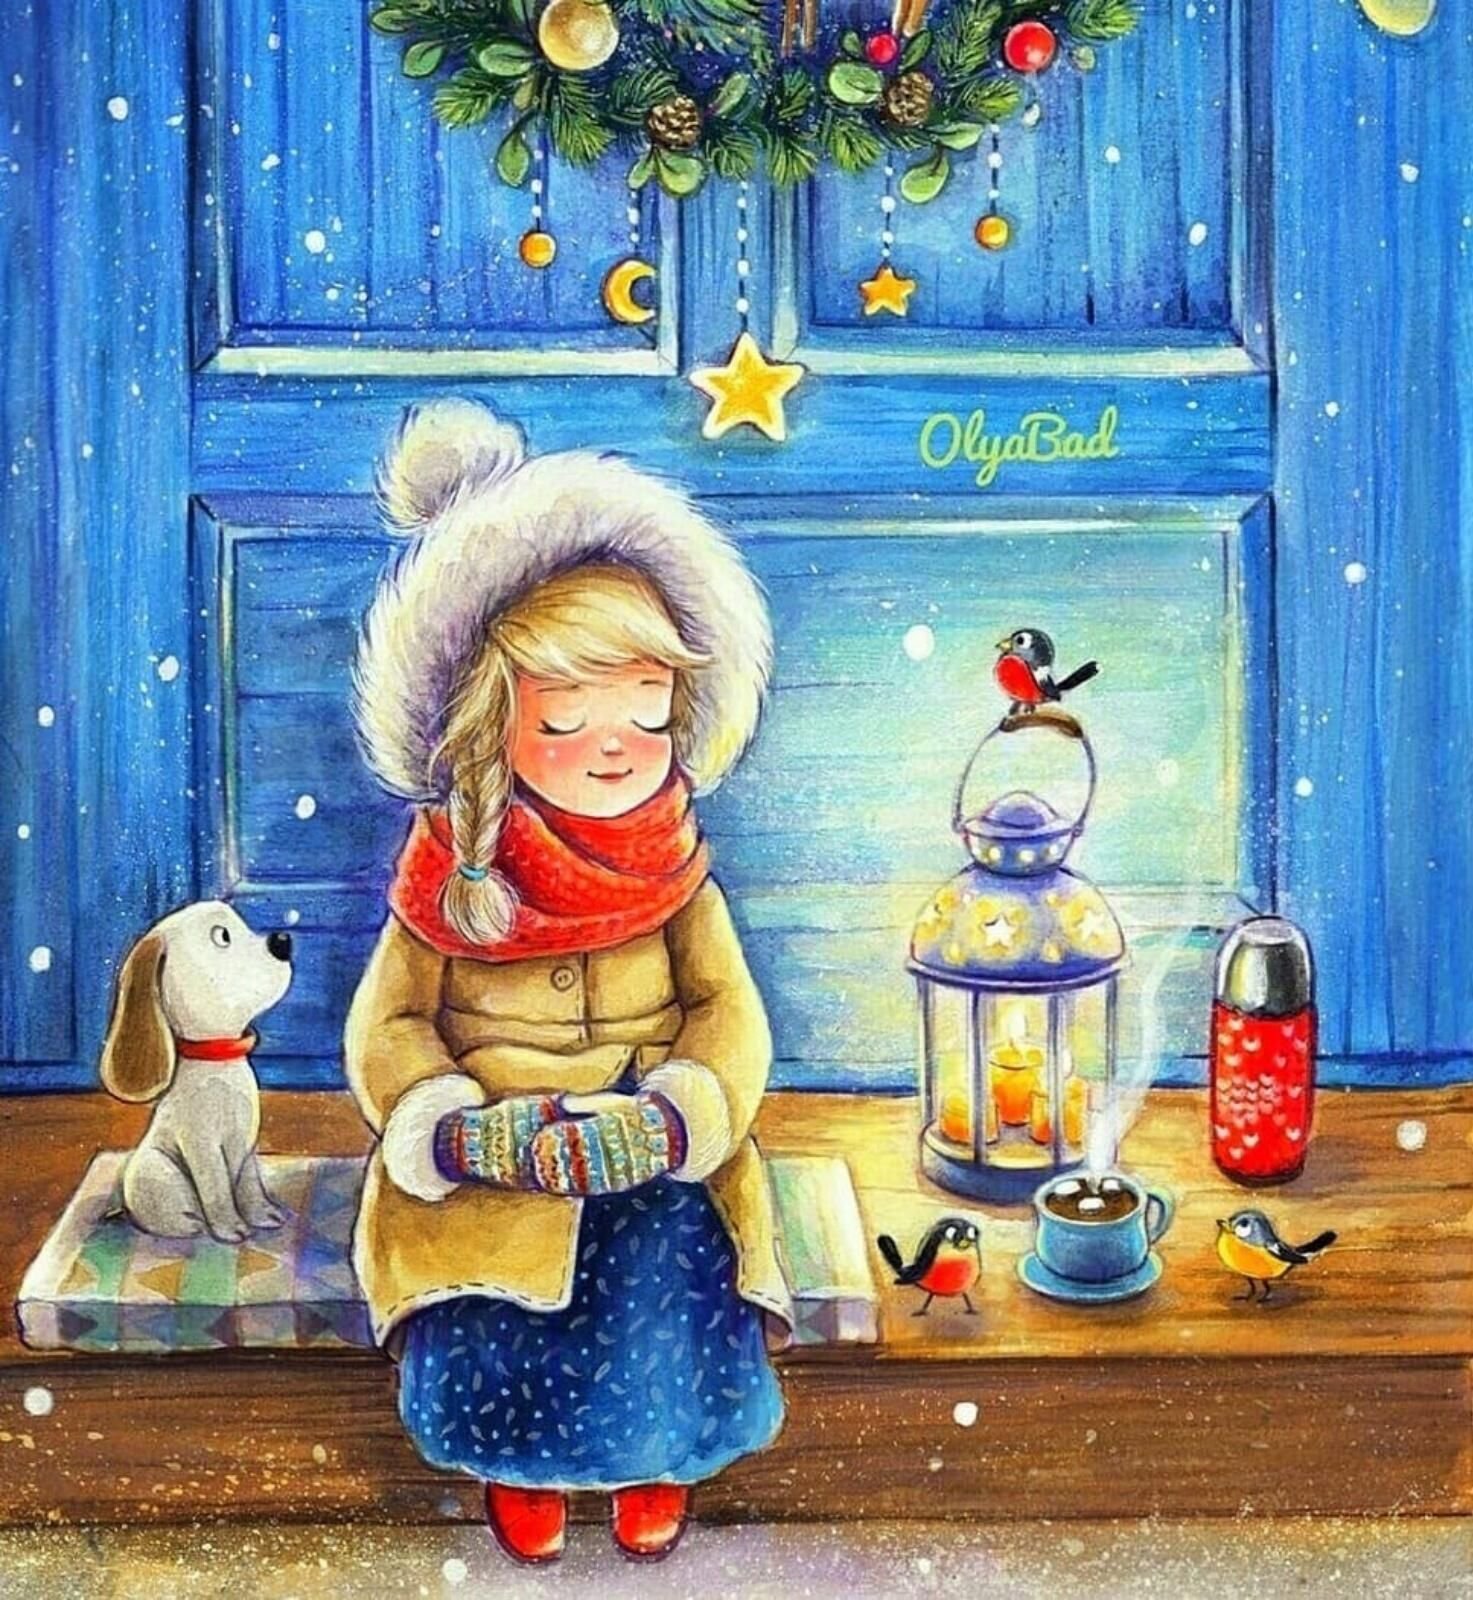 В ожидании новогоднего чуда. Оля Бадулина иллюстрации. Иллюстрация в ожидании нового года. В ожидании новогоднего чуда рисунки детей. Новогоднее ожидание.